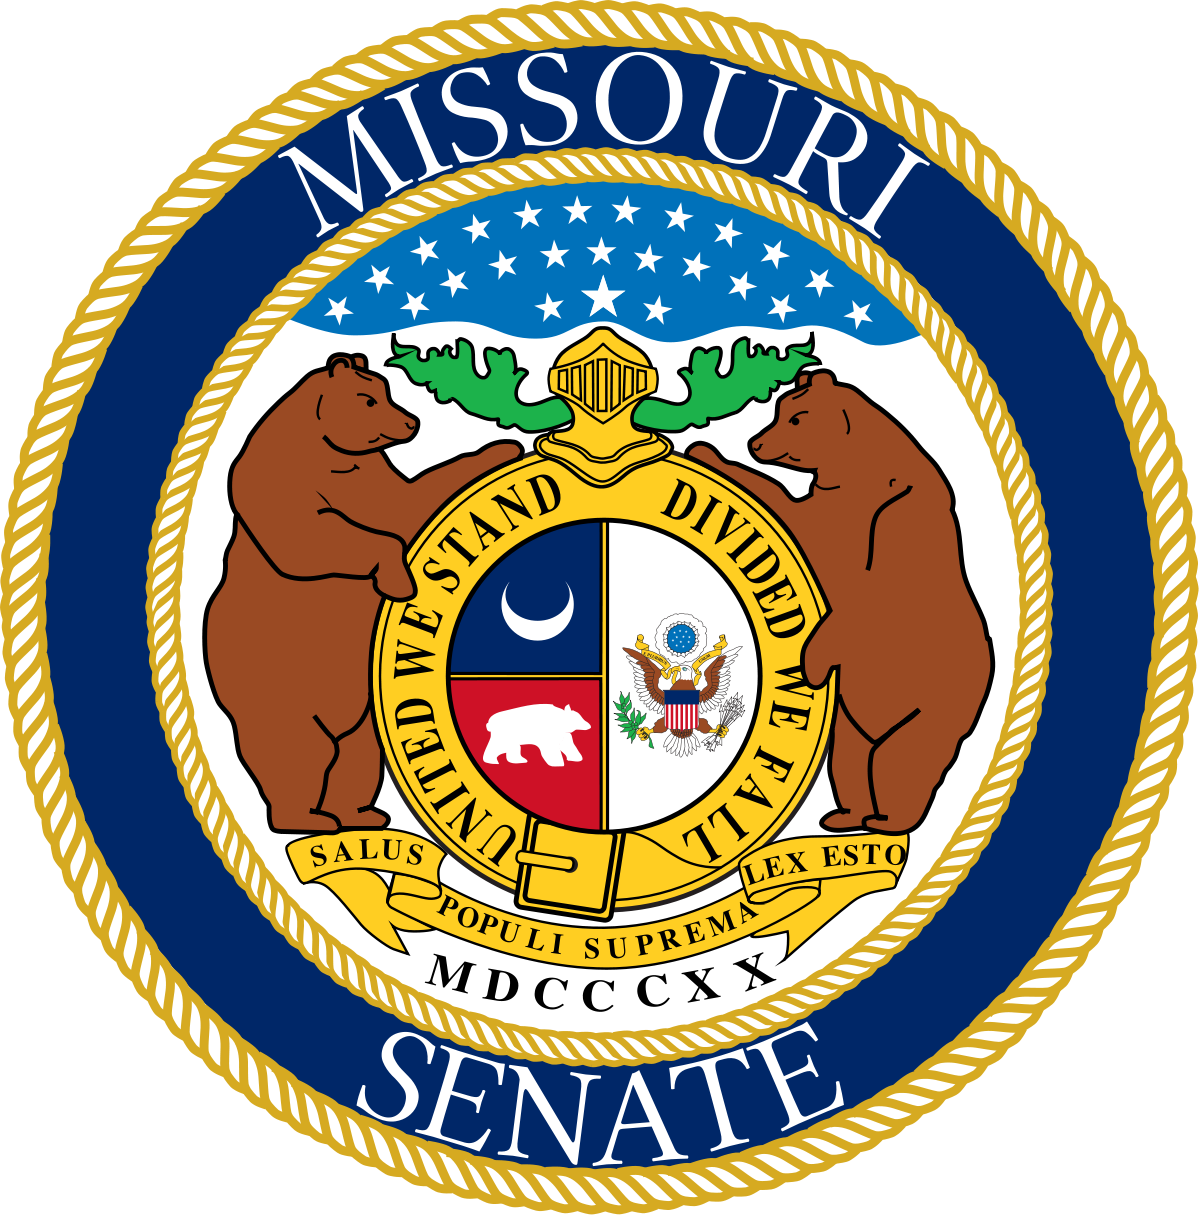 Missouri senate wikipedia . Government clipart state legislature